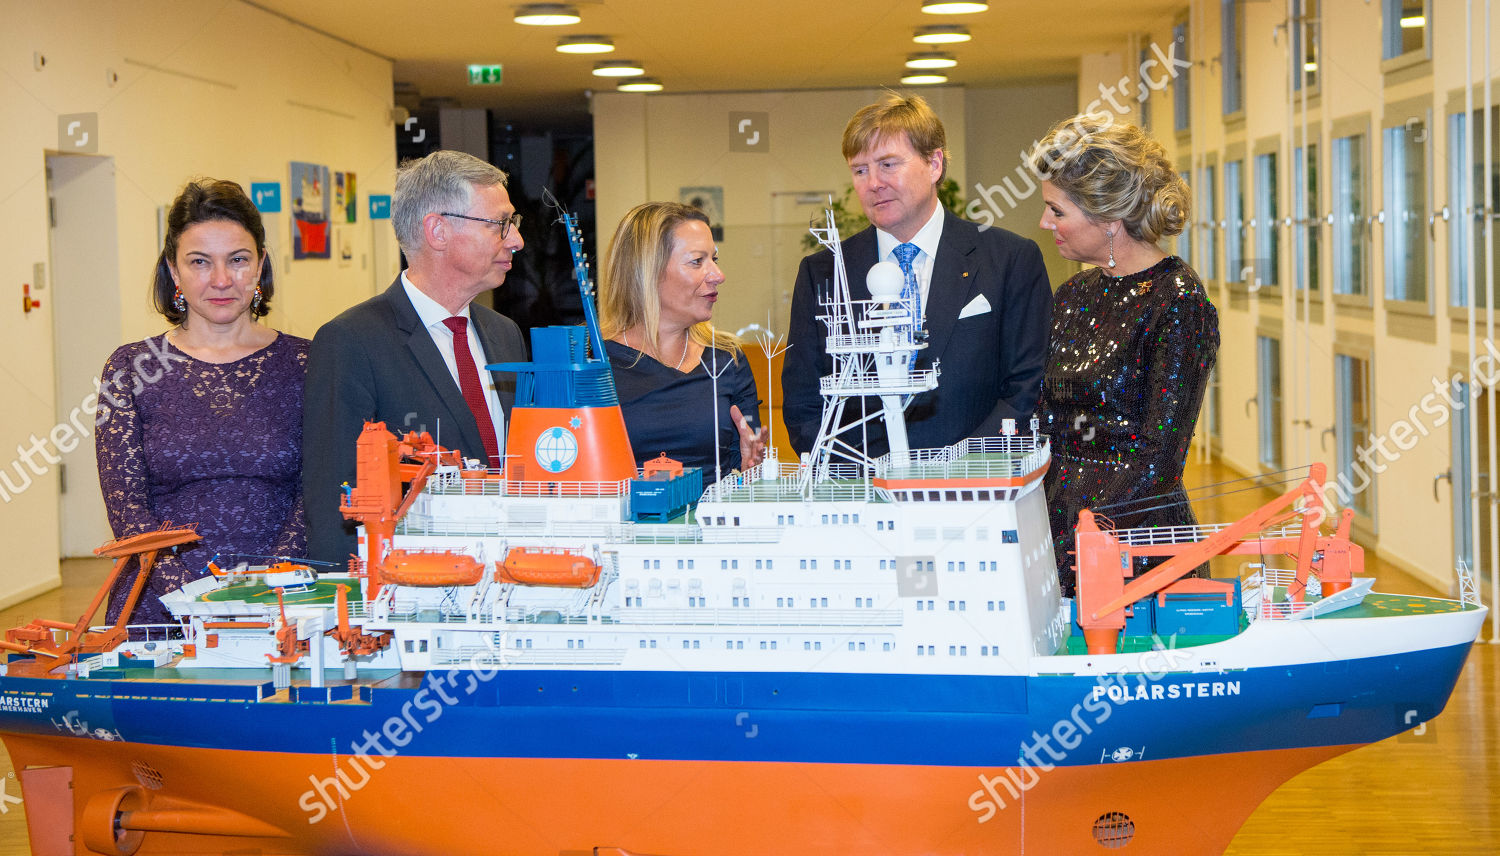 dutch-royals-visit-to-bremen-germany-shutterstock-editorial-10143597cw.jpg